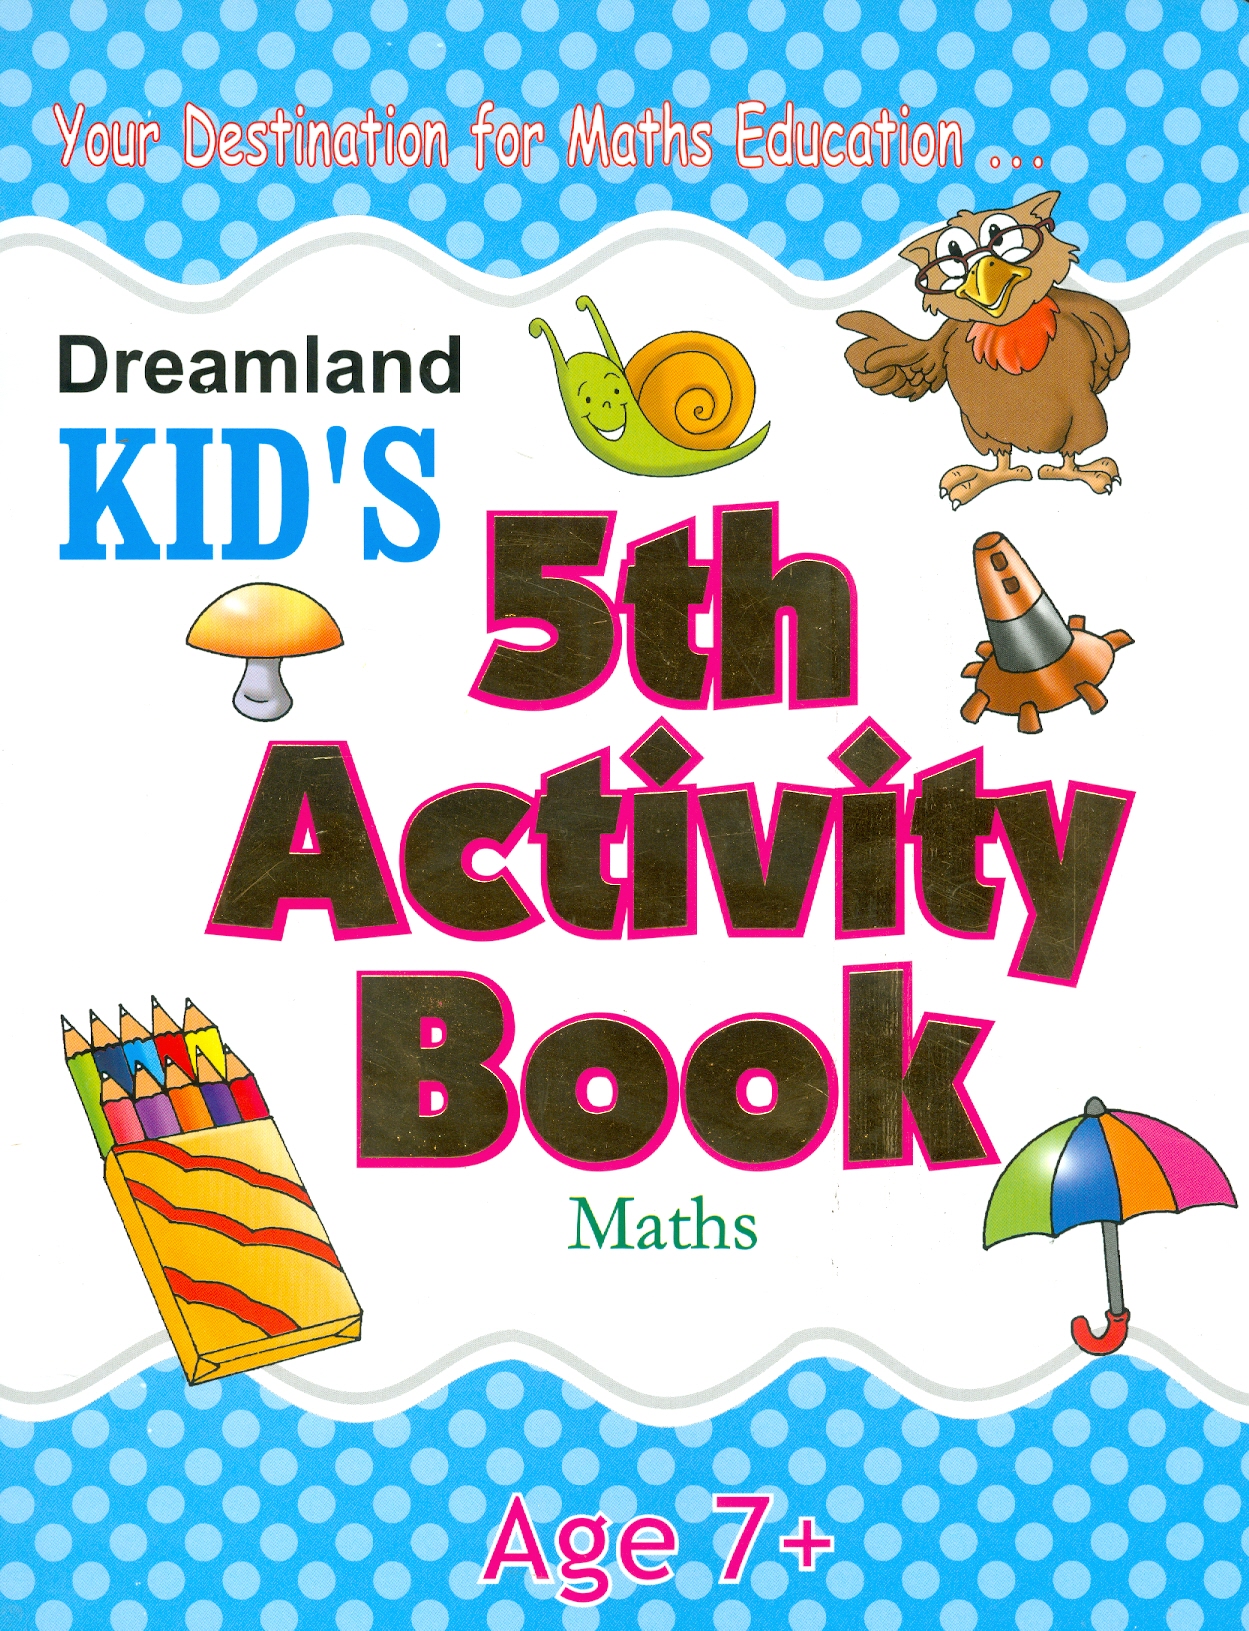 Kid's 5th Activity Book Maths - Your Destination For Maths Education - Age 7+ (Các Hoạt Động Toán Học Cho Trẻ 7+)